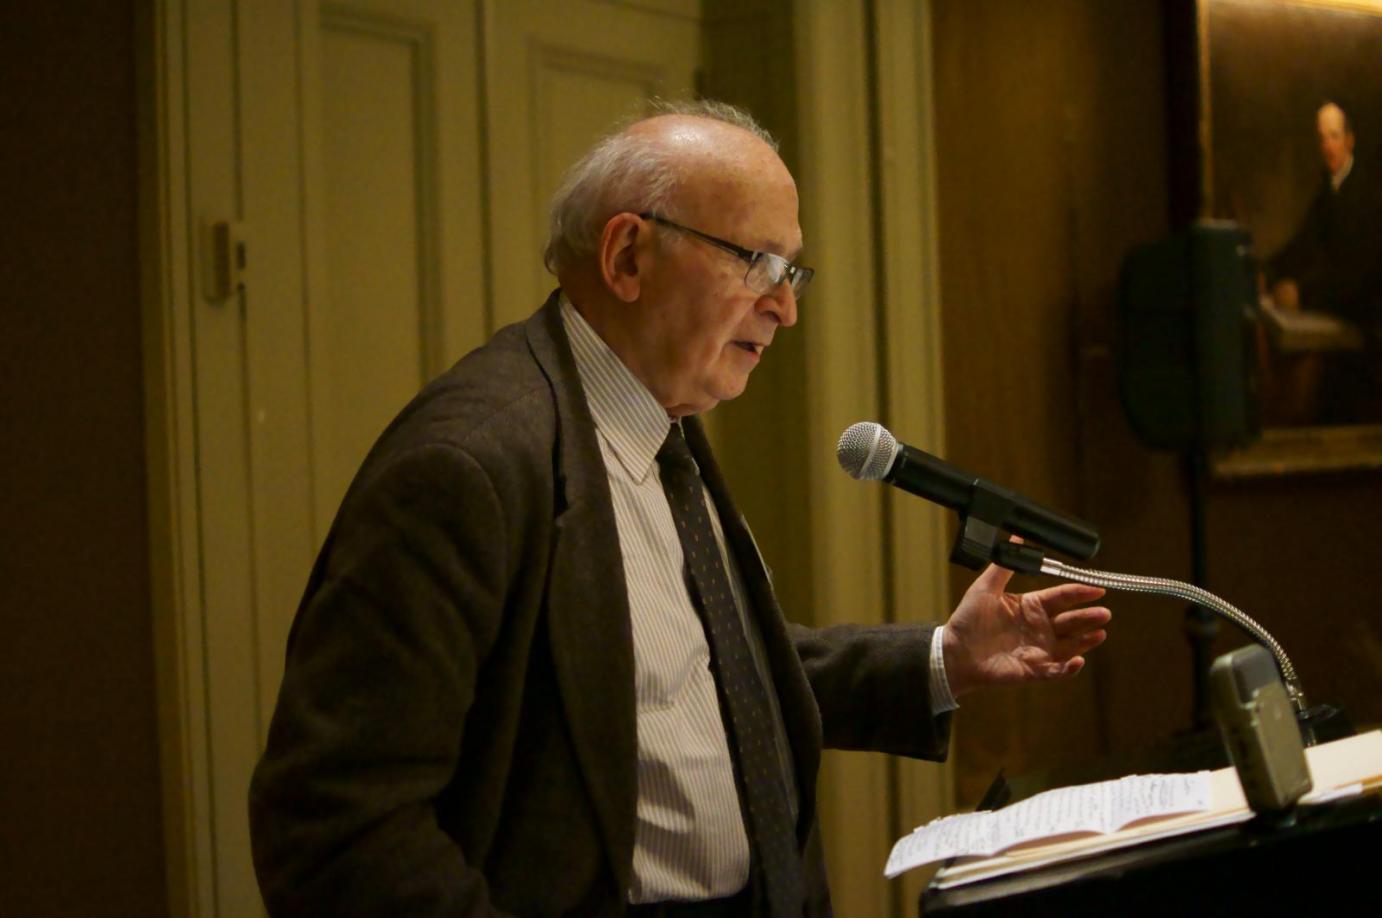 Gus Ranis speaking at the lectern